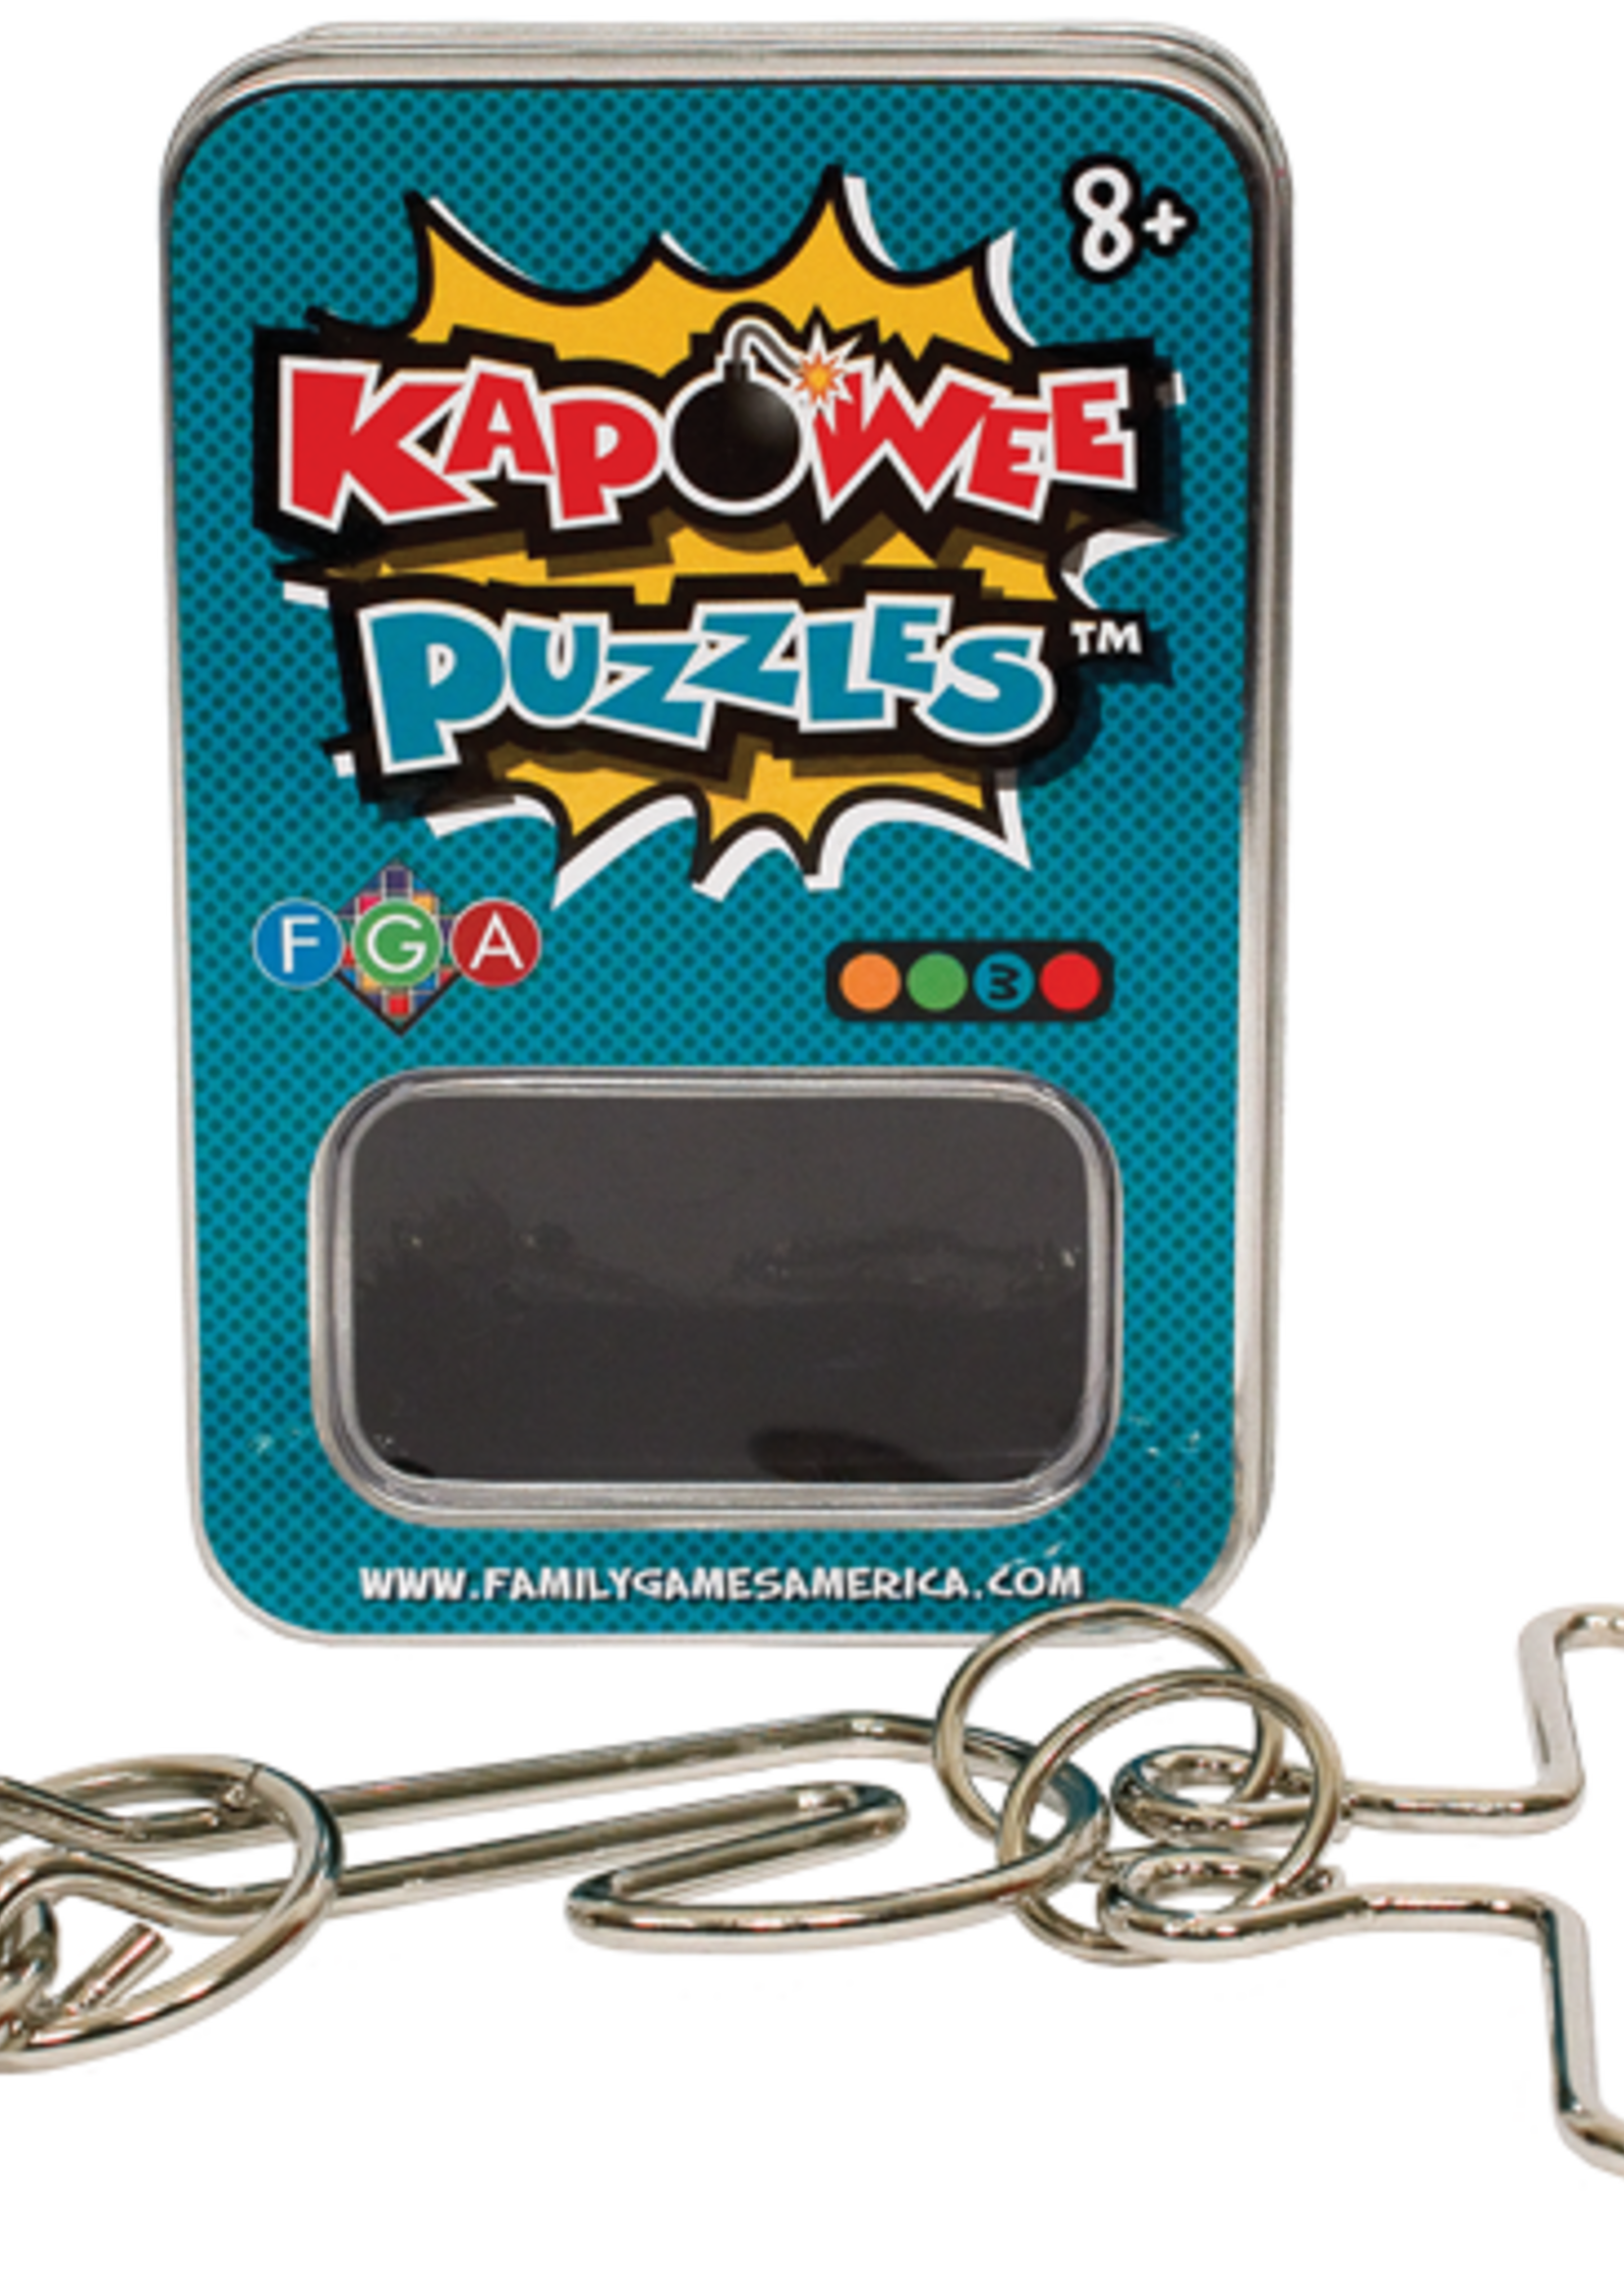 Family Games America FGA Kapowee Puzzle - 3 et 4 (2 modèles)